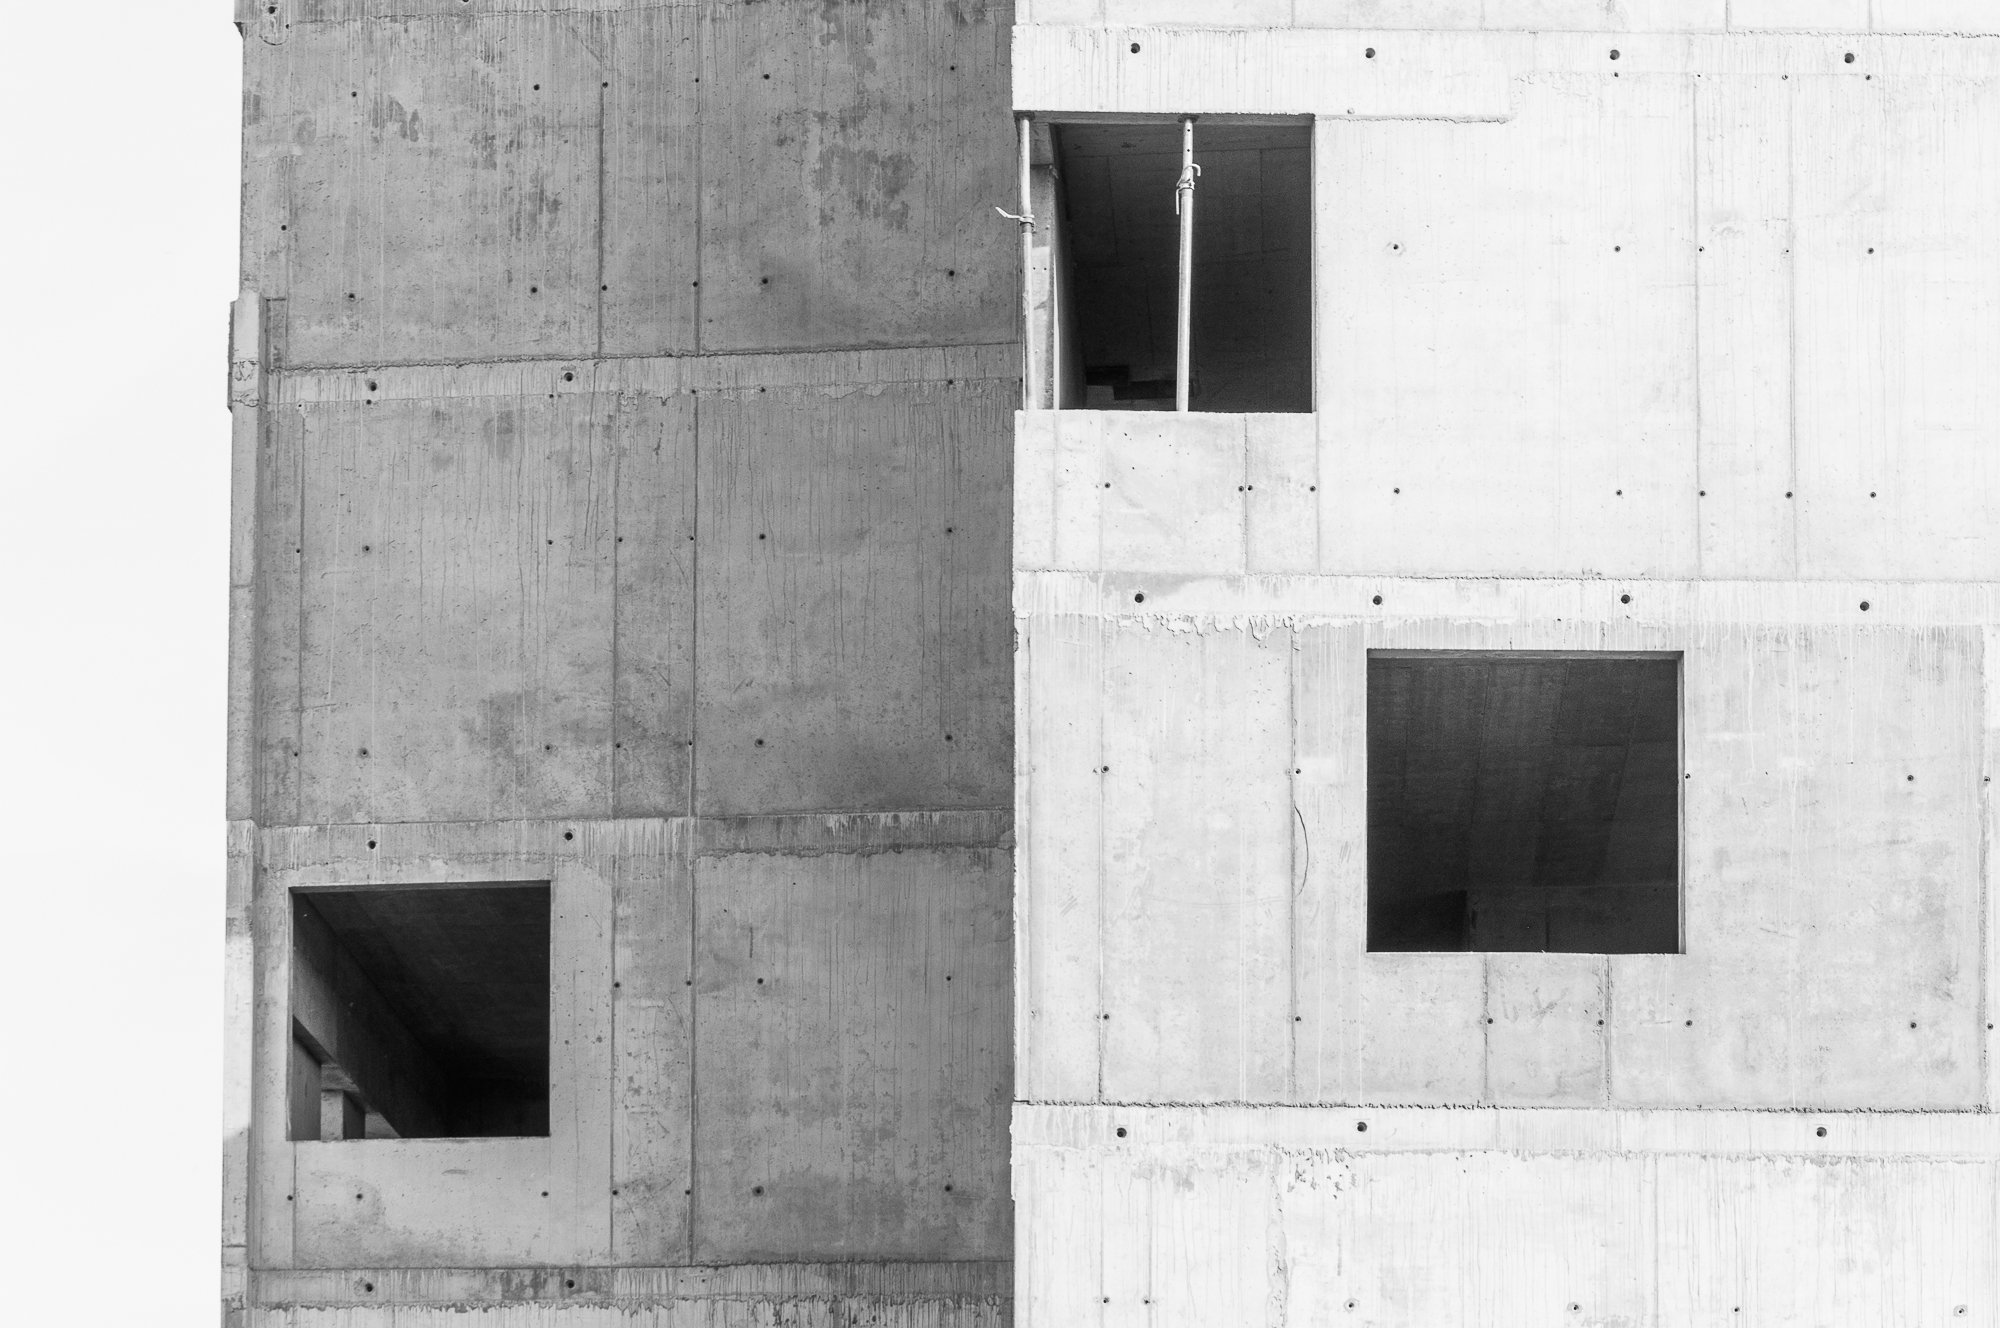 Adam Mazek Photography Warsaw (Warszawa) 2020. Post: "Morning." Minimalism. Concrete windows. Abstraction. Geometry.